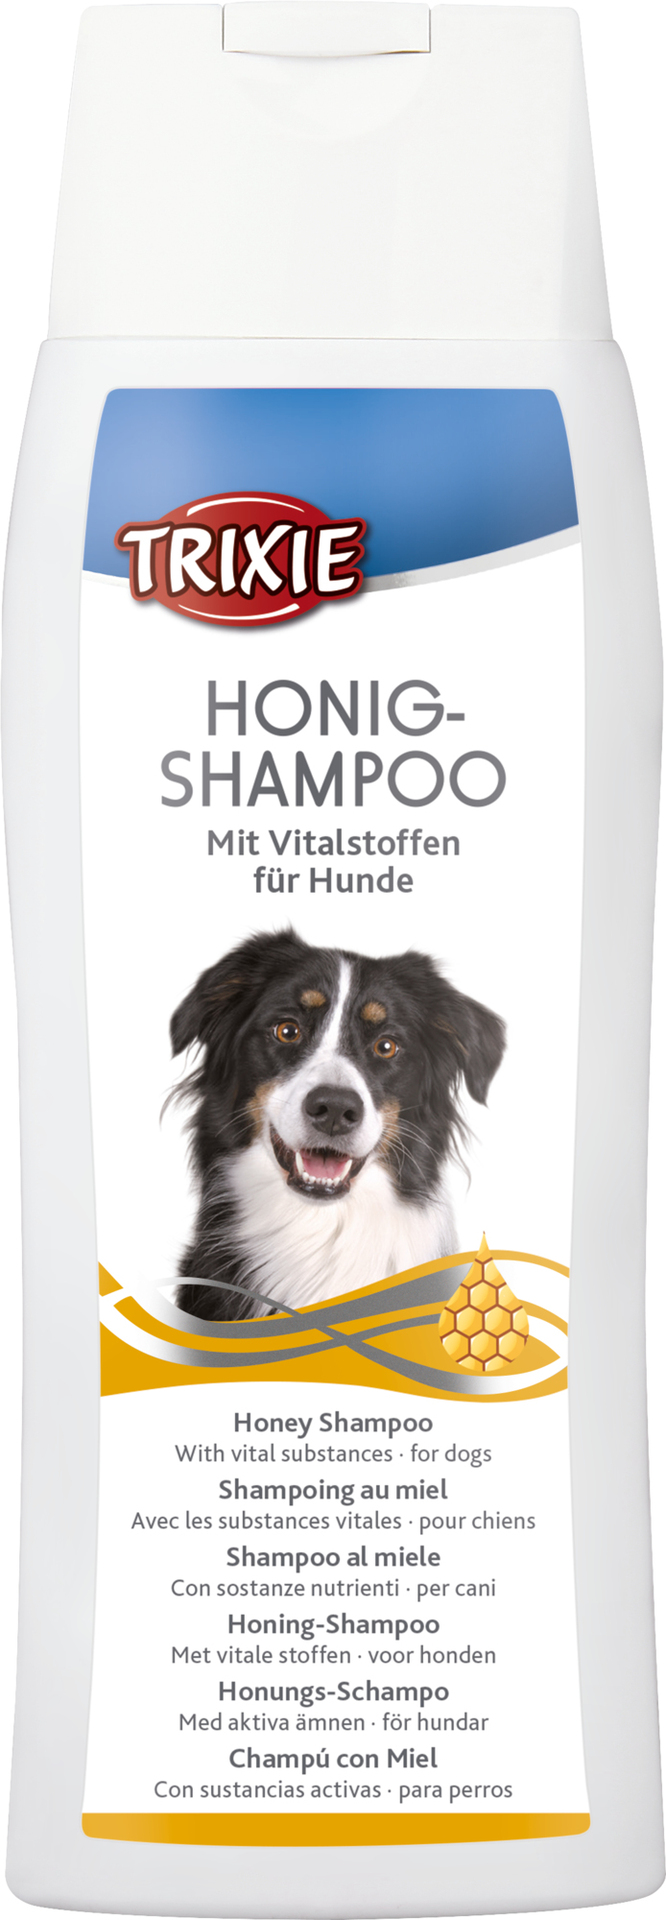 Trixie Heimtierbedarf Honig-Shampoo